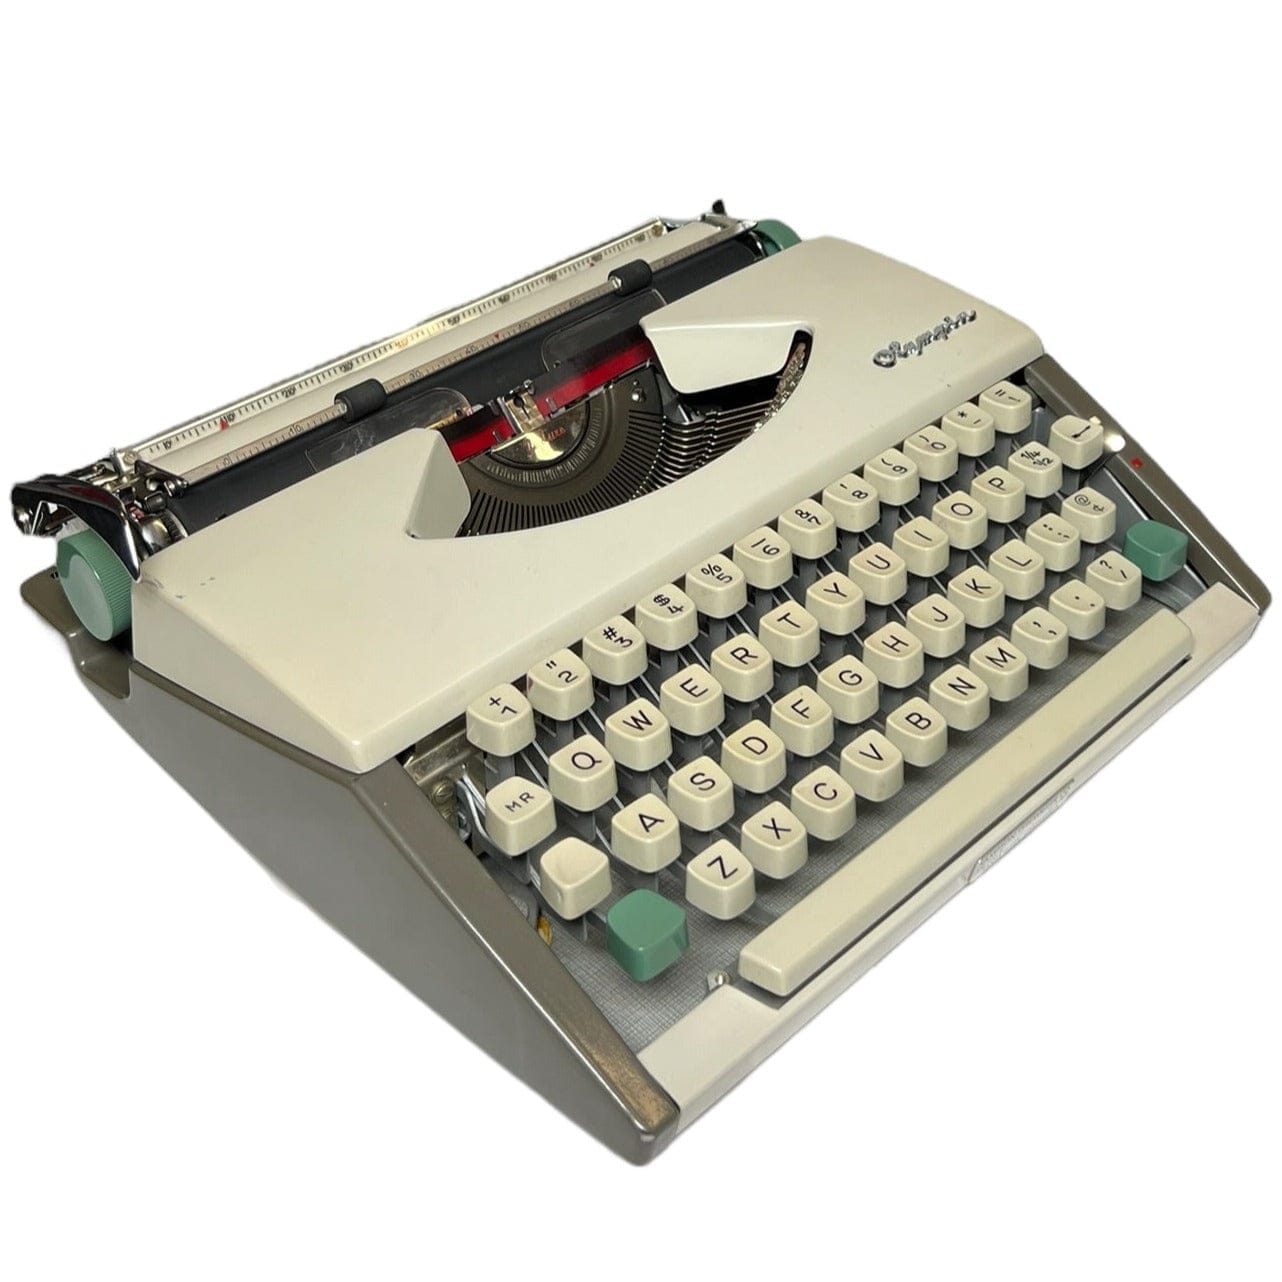 Olympia SF (Cursive) Typewriter